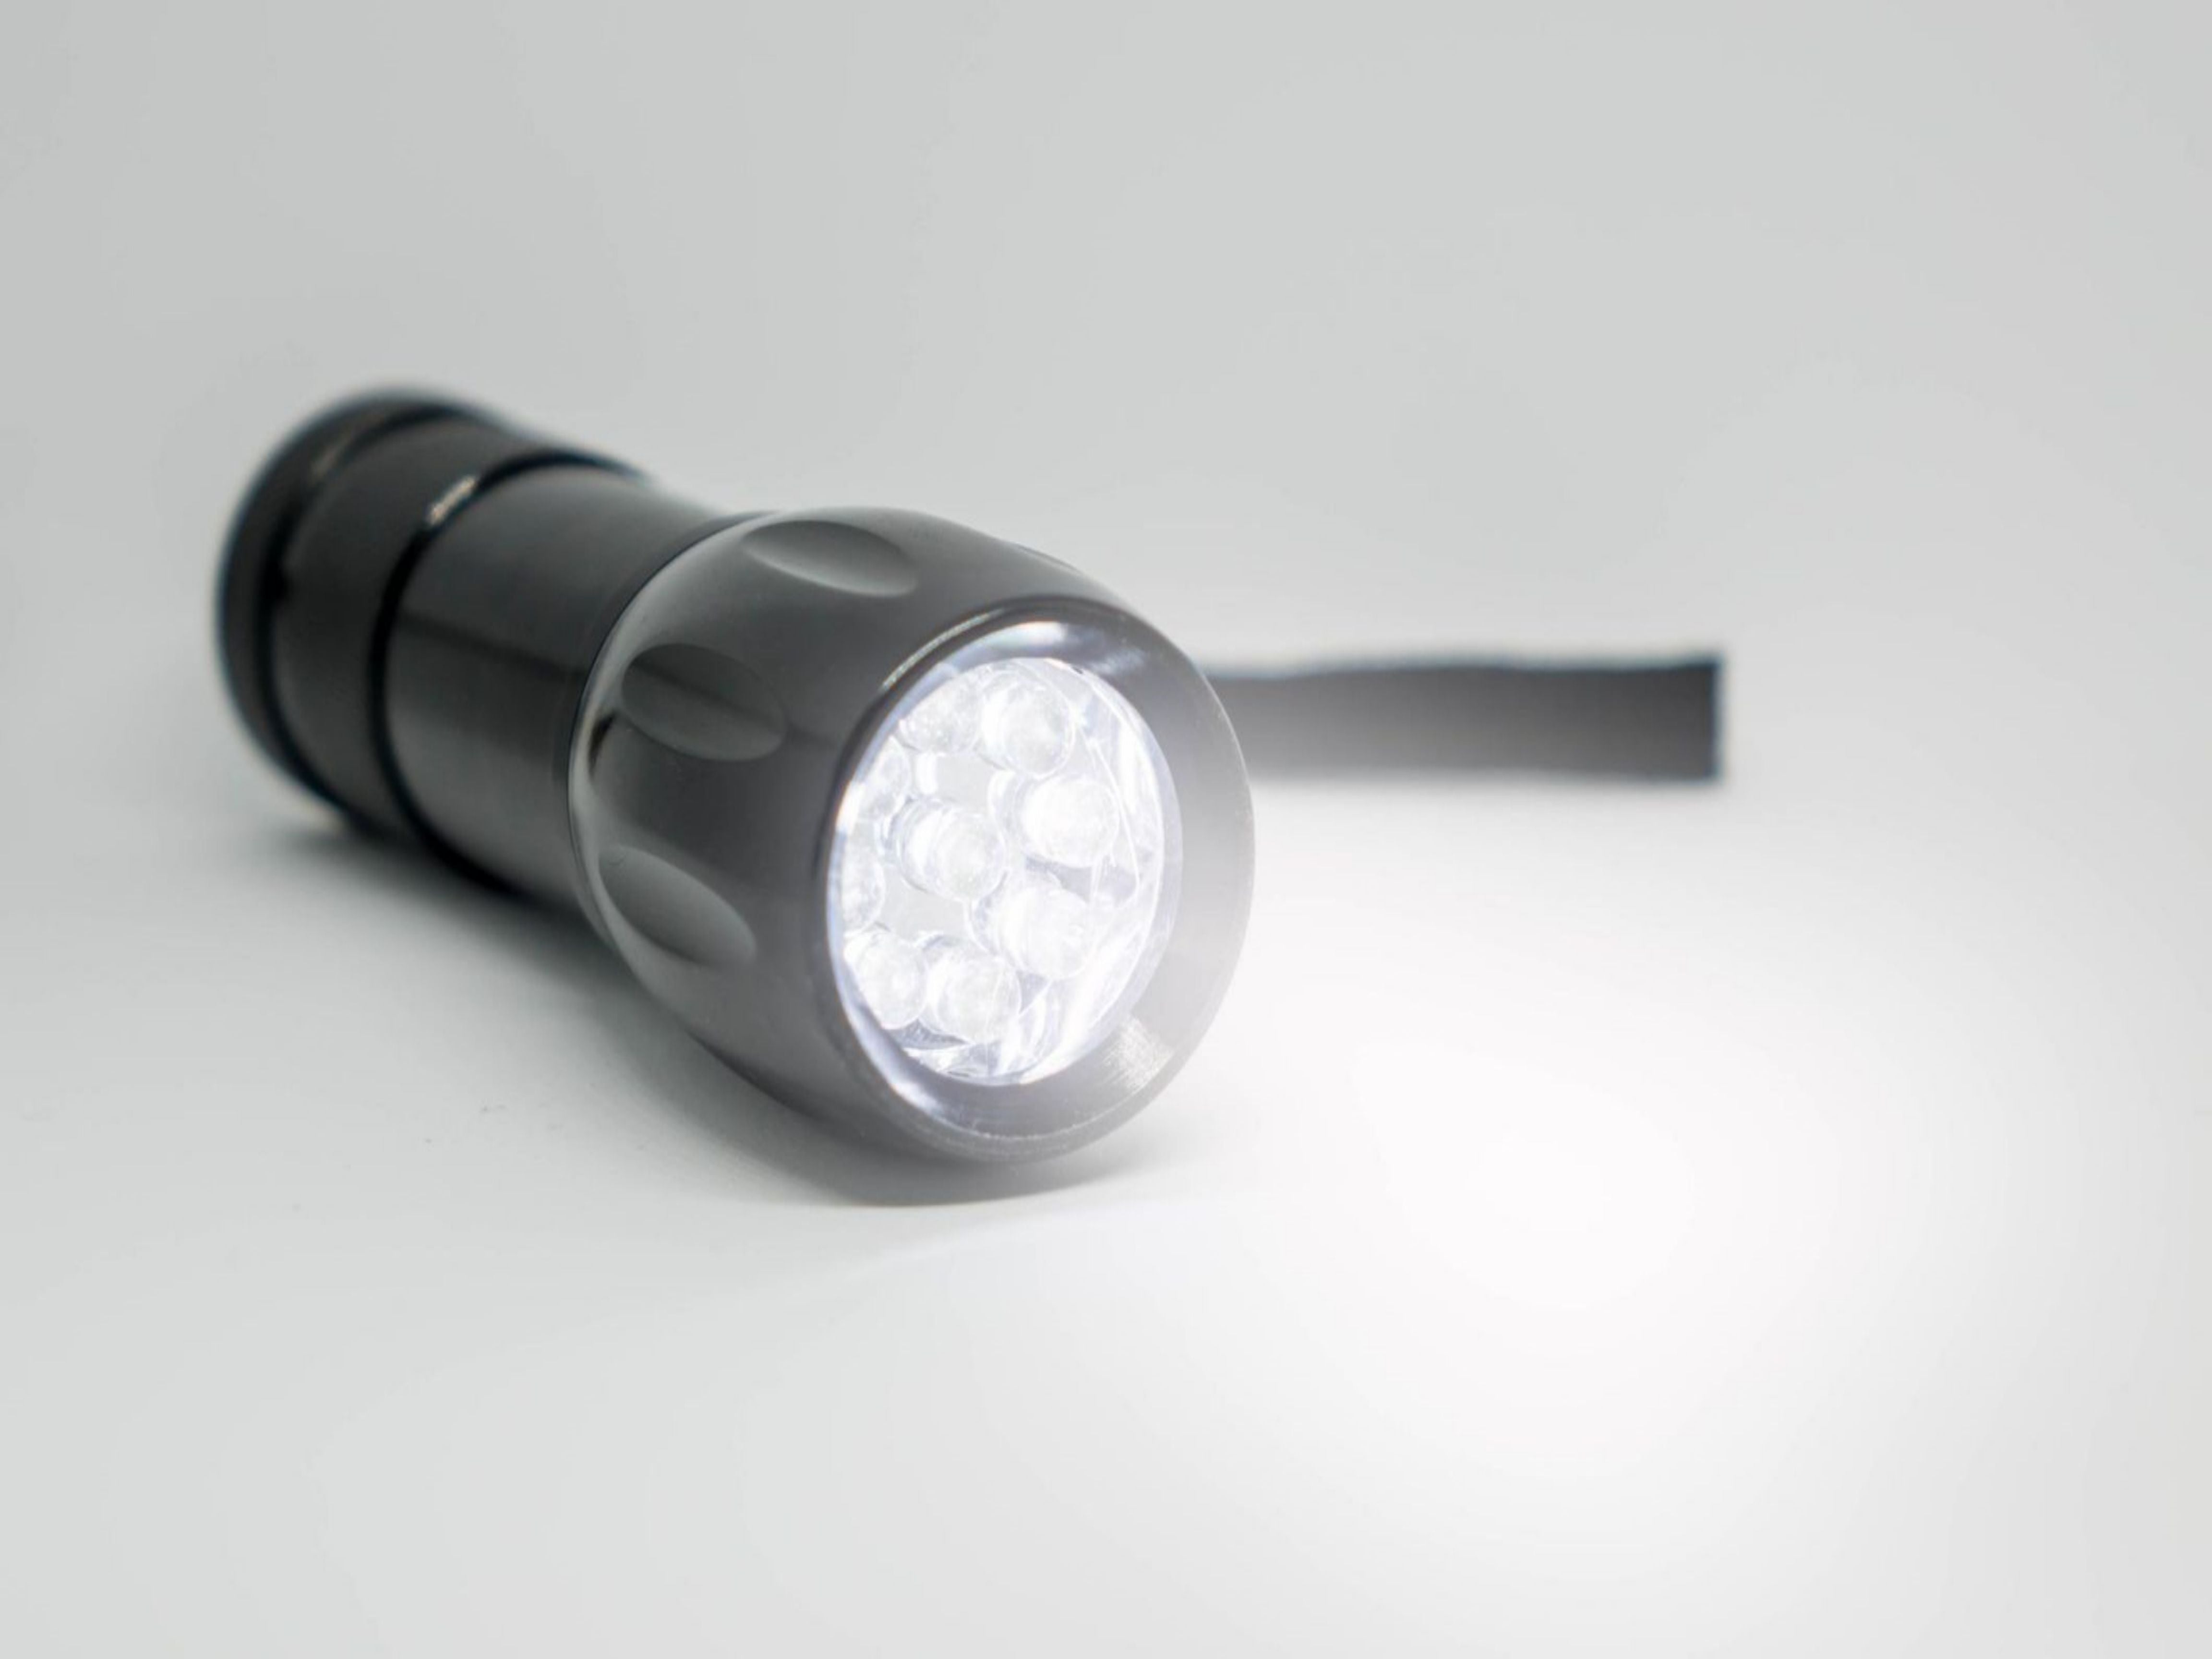 LED flashlight lens